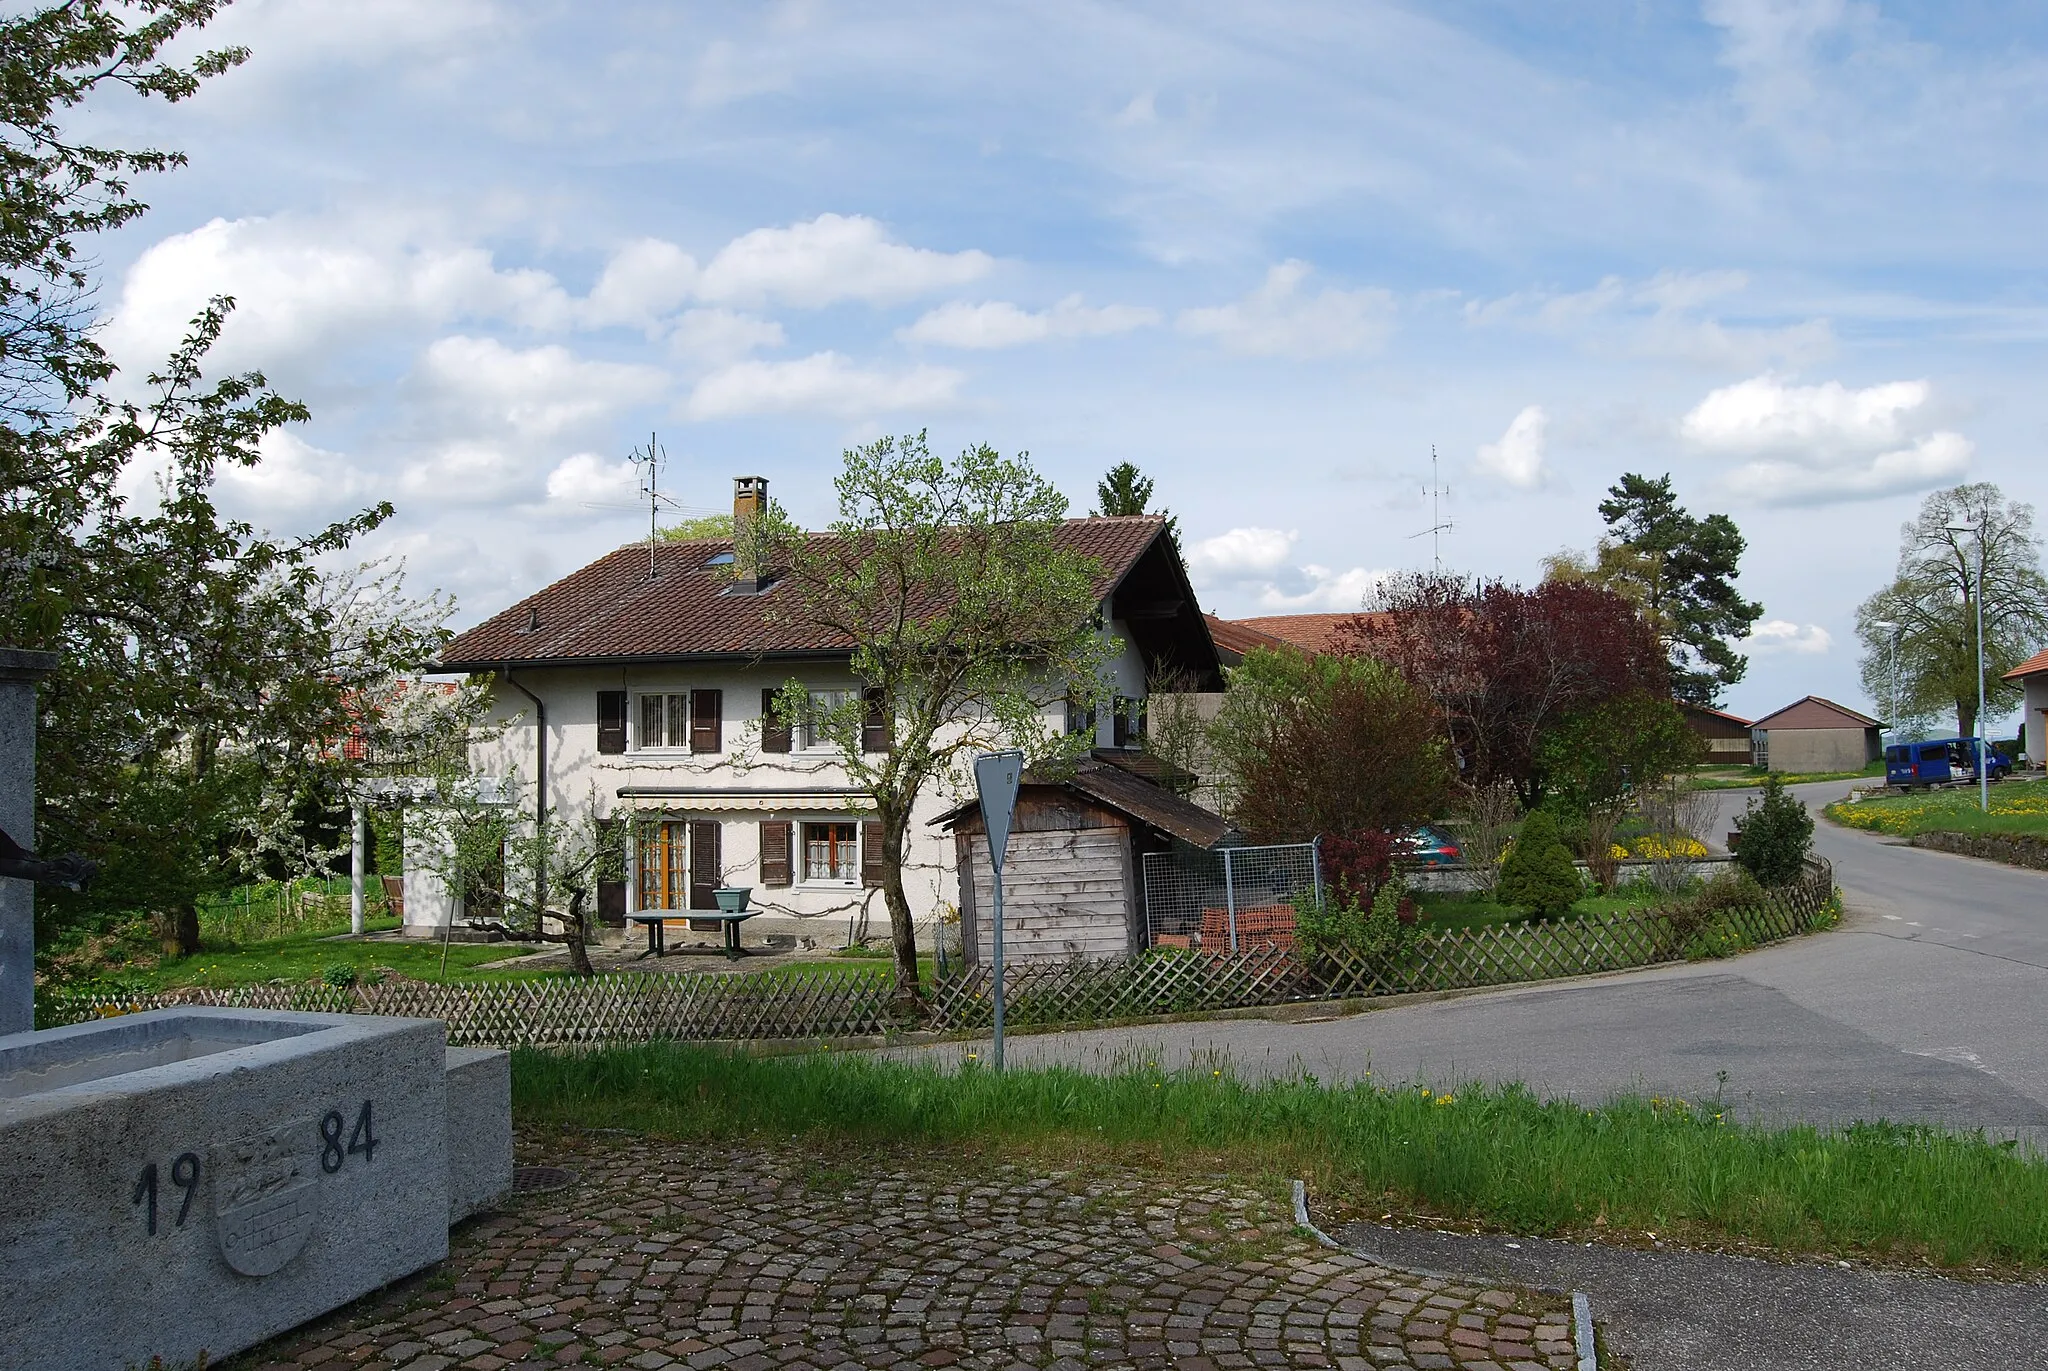 Photo showing: Rueyres-Saint-Laurent, municipality Le Glèbe, canton of Fribourg, Switzerland